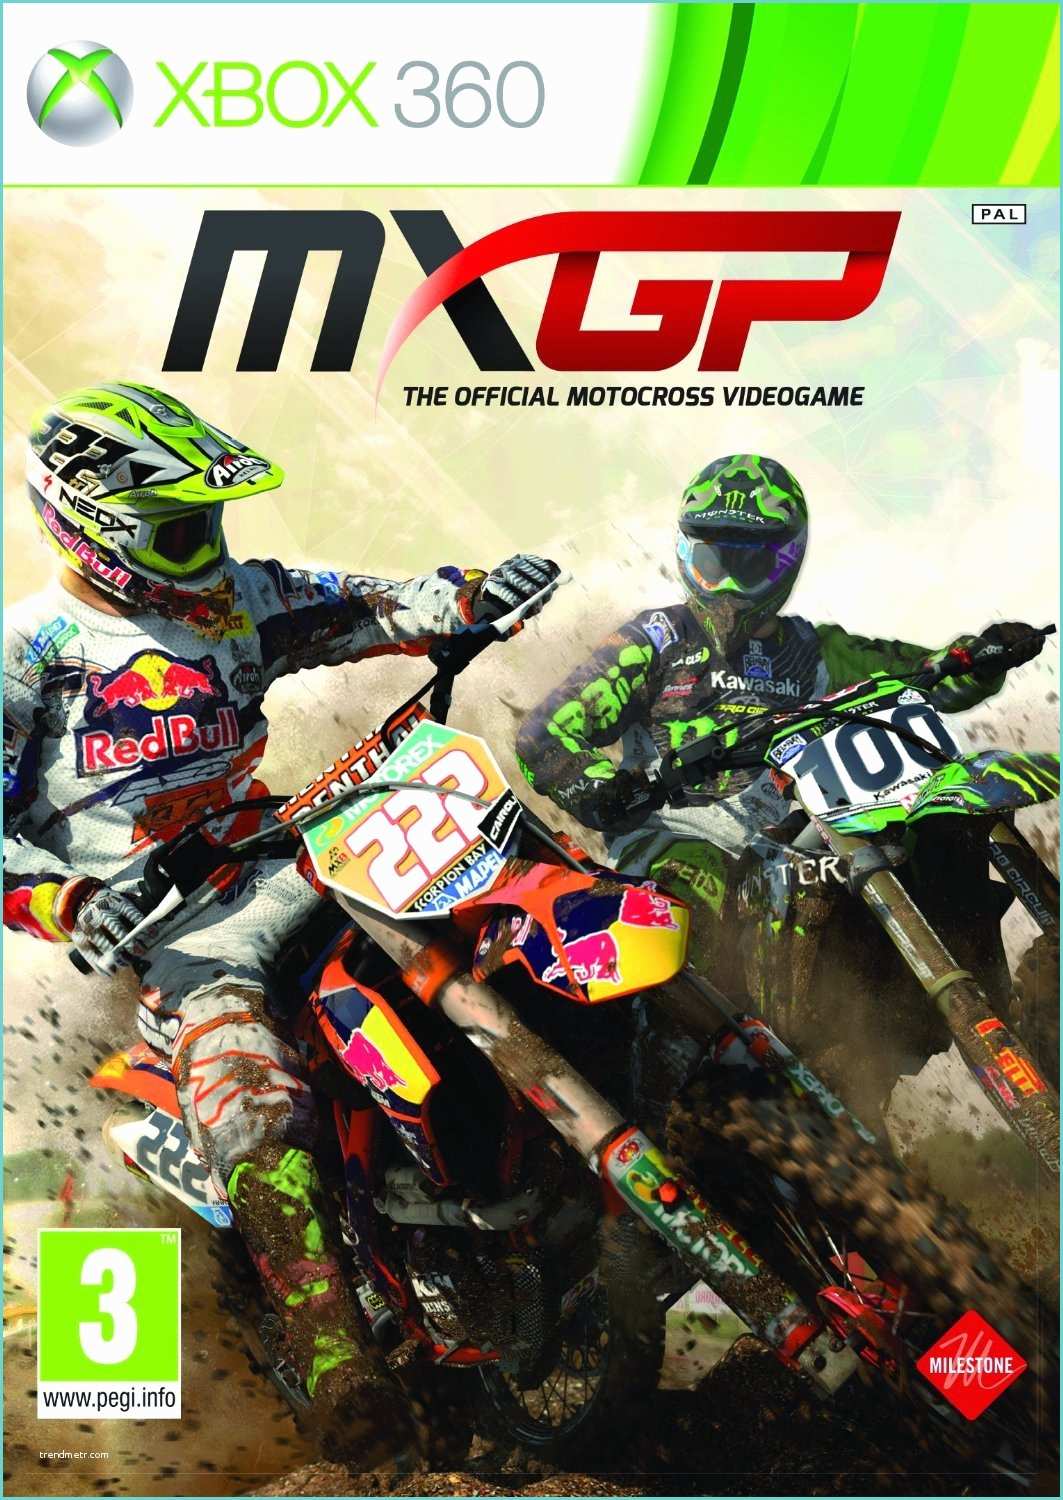 Giochi Di Motocross Gratis Live Mxgp the Ficial Motocross Videogame Sur Xbox 360